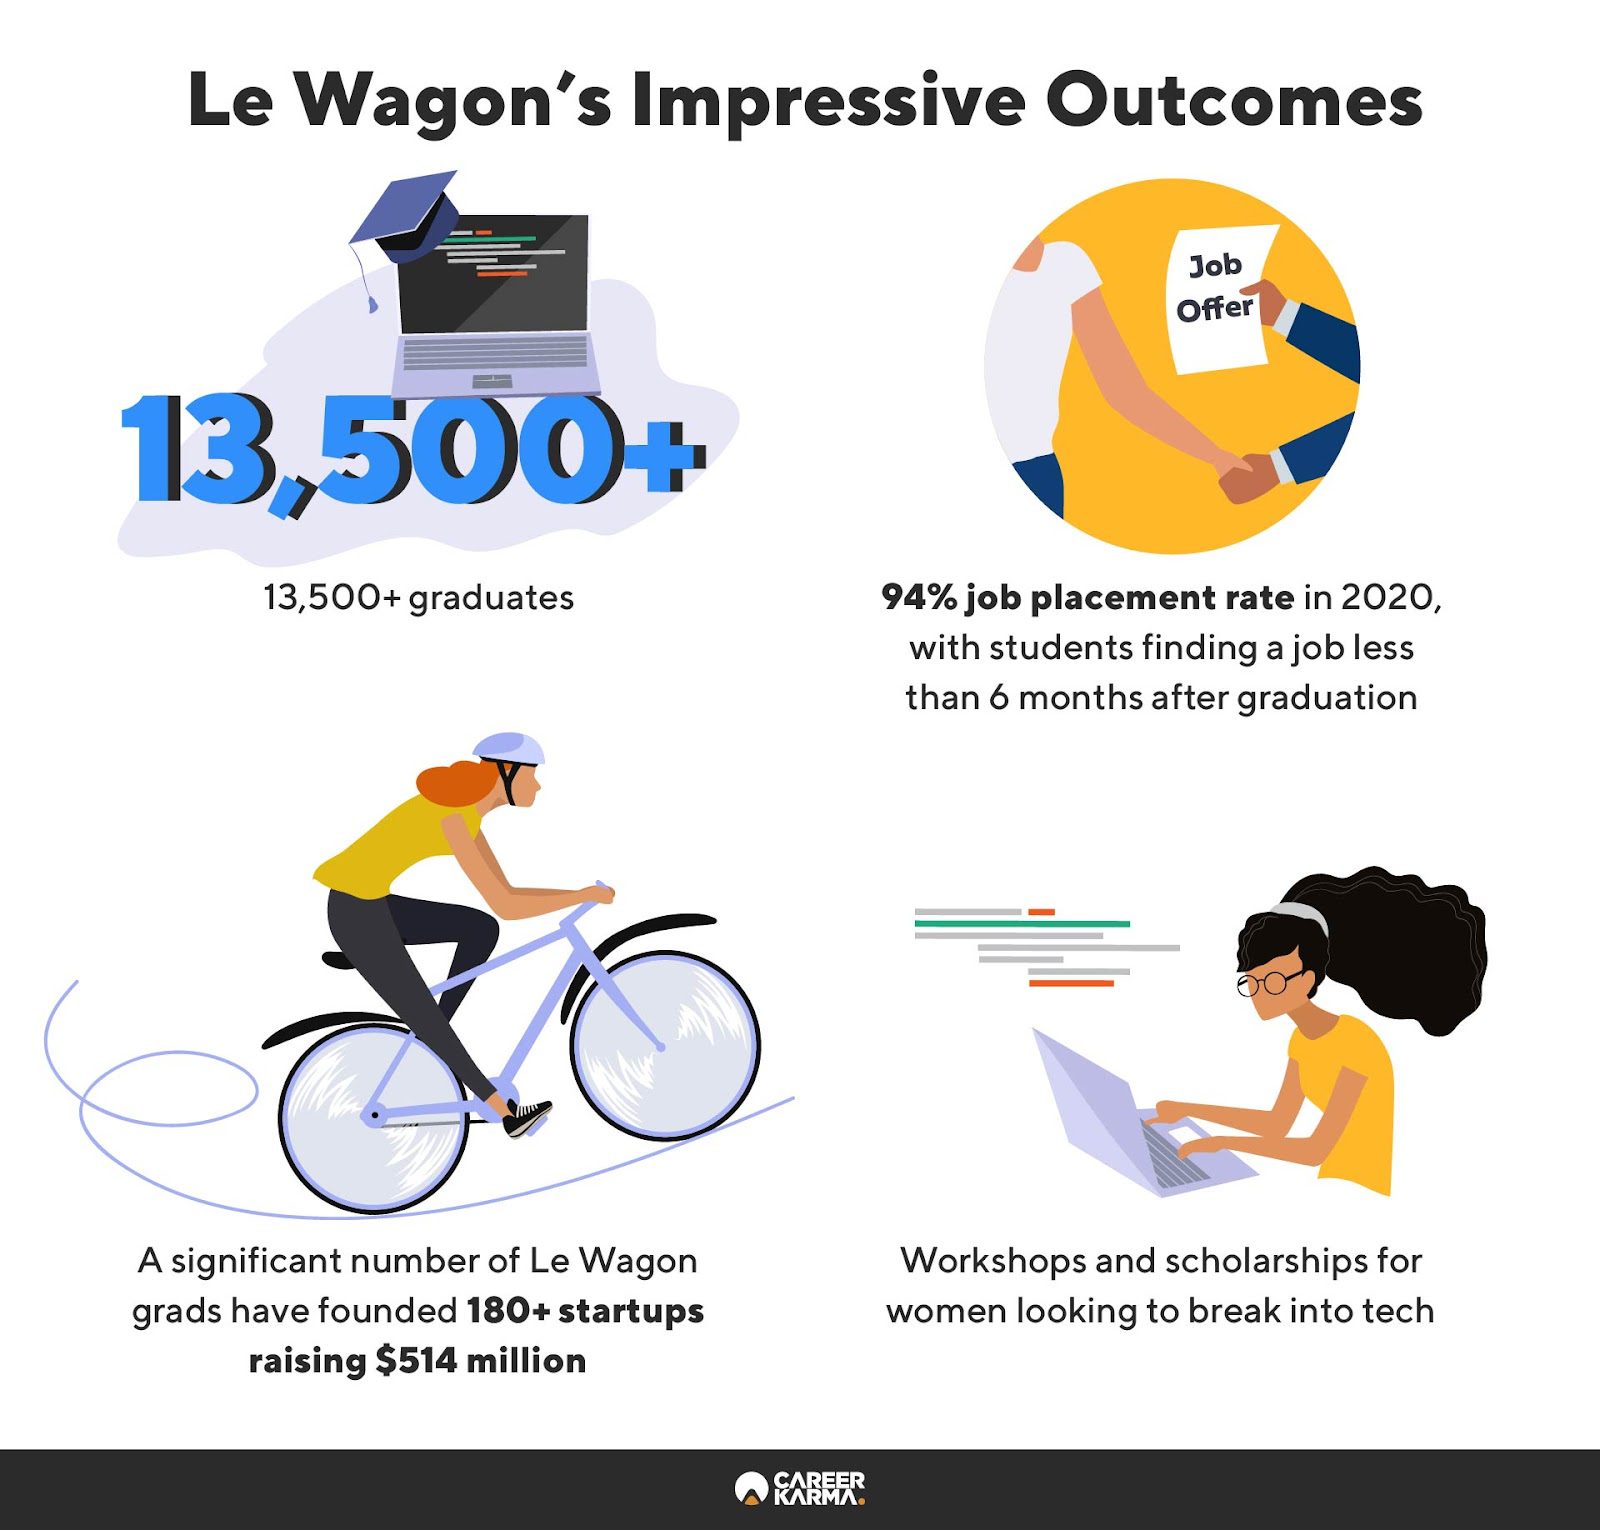 An infographic highlighting Le Wagon’s outcomes